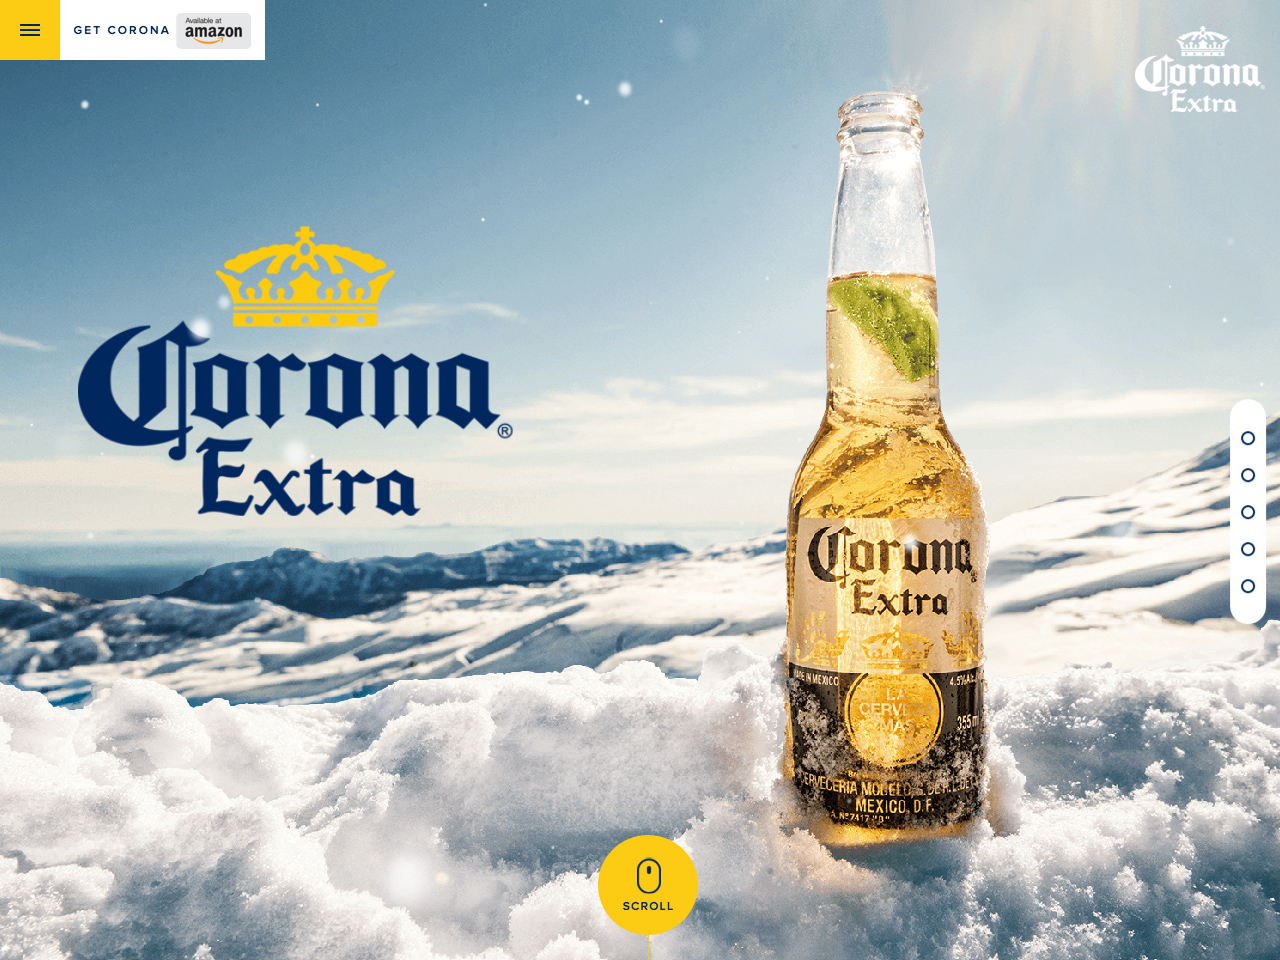 Corona Extra – コロナ・エキストラ / コロナビール公式サイト